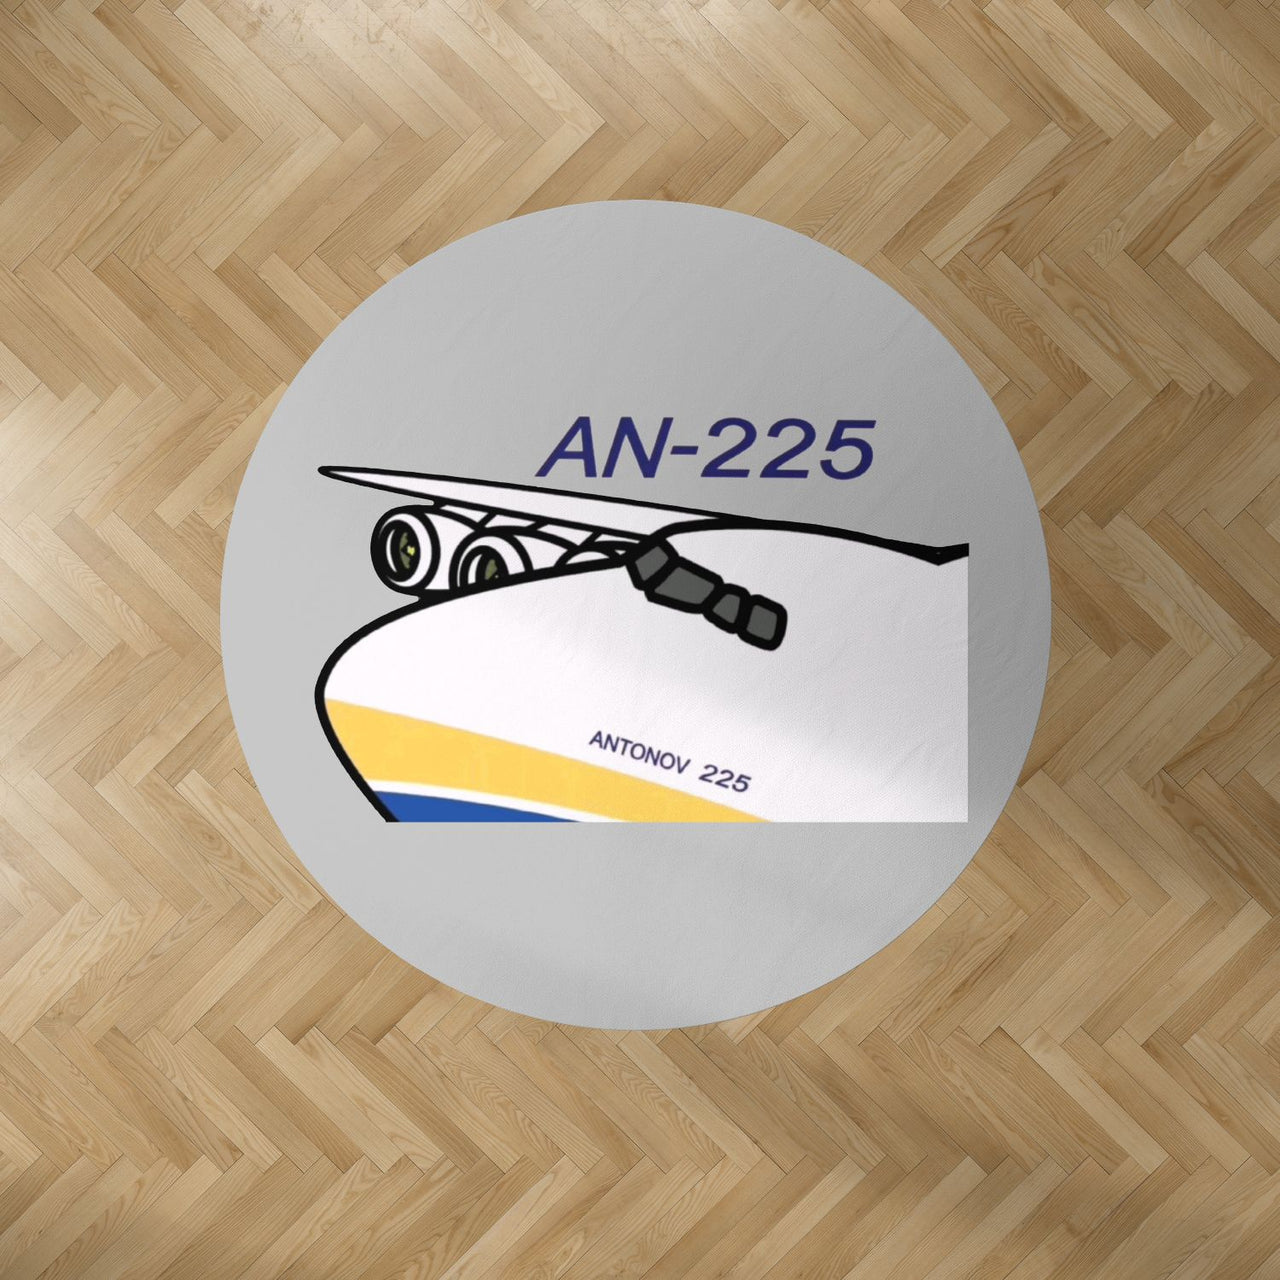 Antonov AN-225 (11) Designed Carpet & Floor Mats (Round)